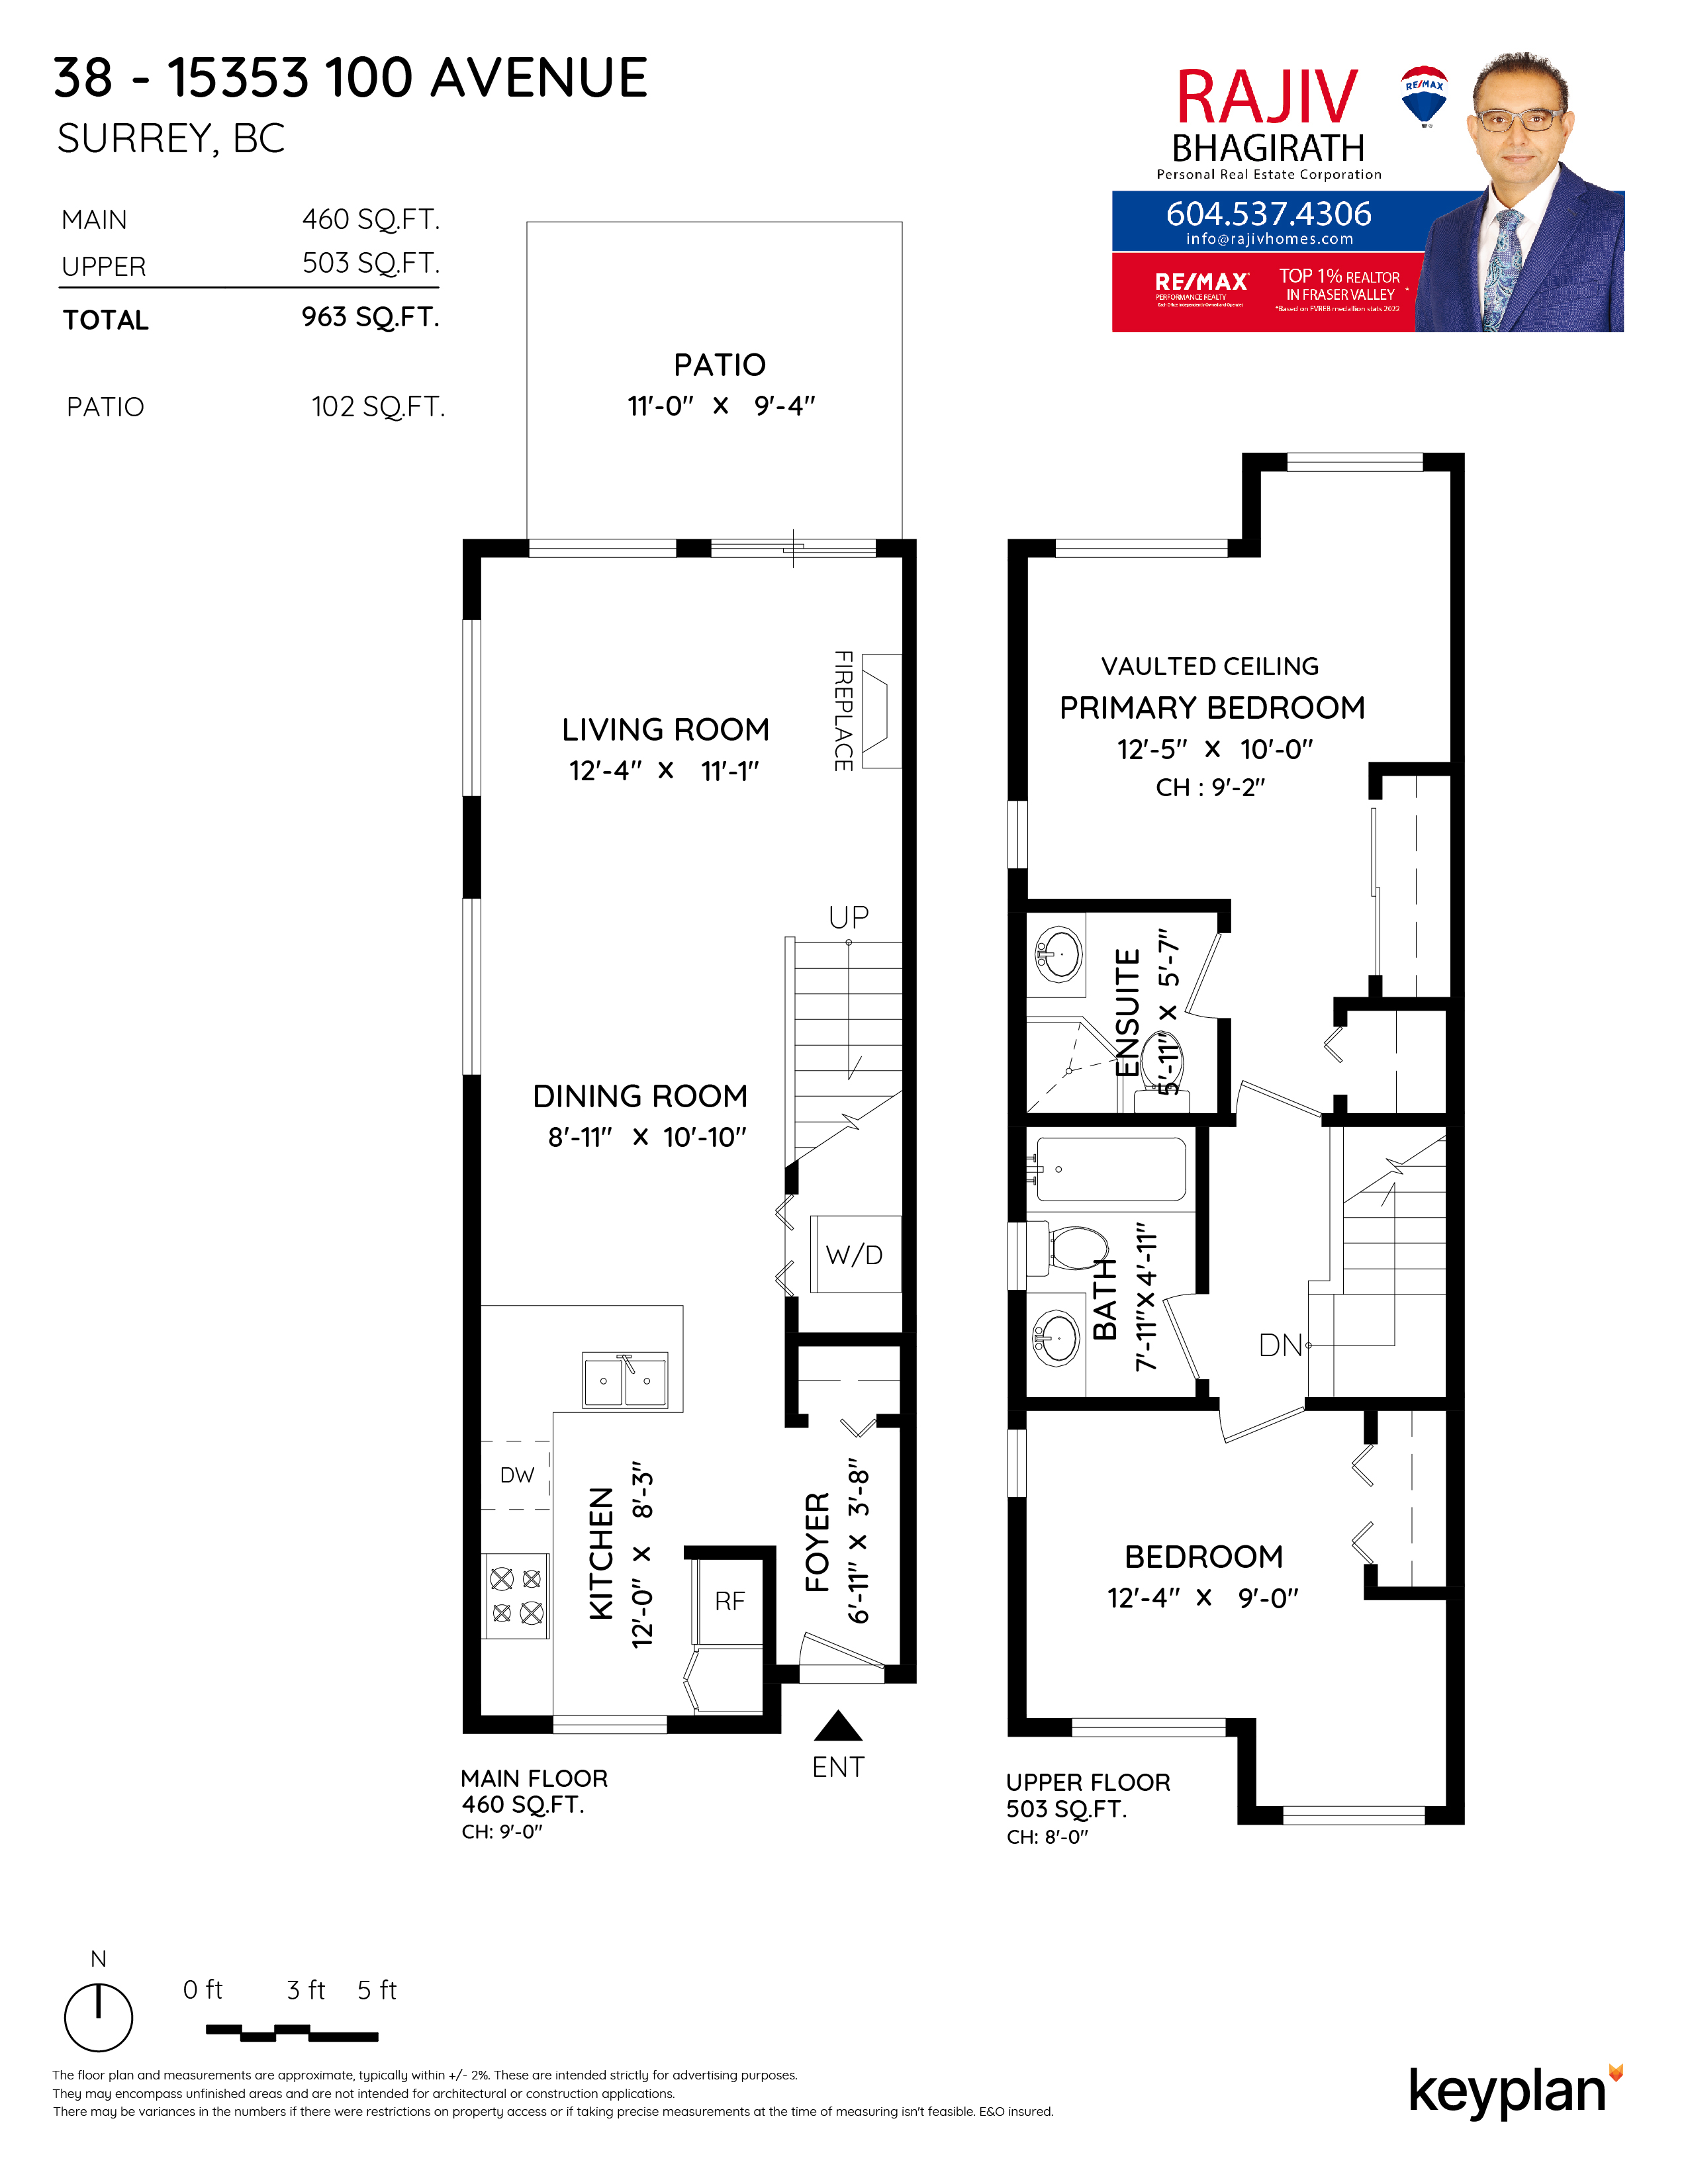 Rajiv Bhagirath - Unit 38 - 15353 100 Avenue, Surrey, BC, Canada | Floor Plan 1